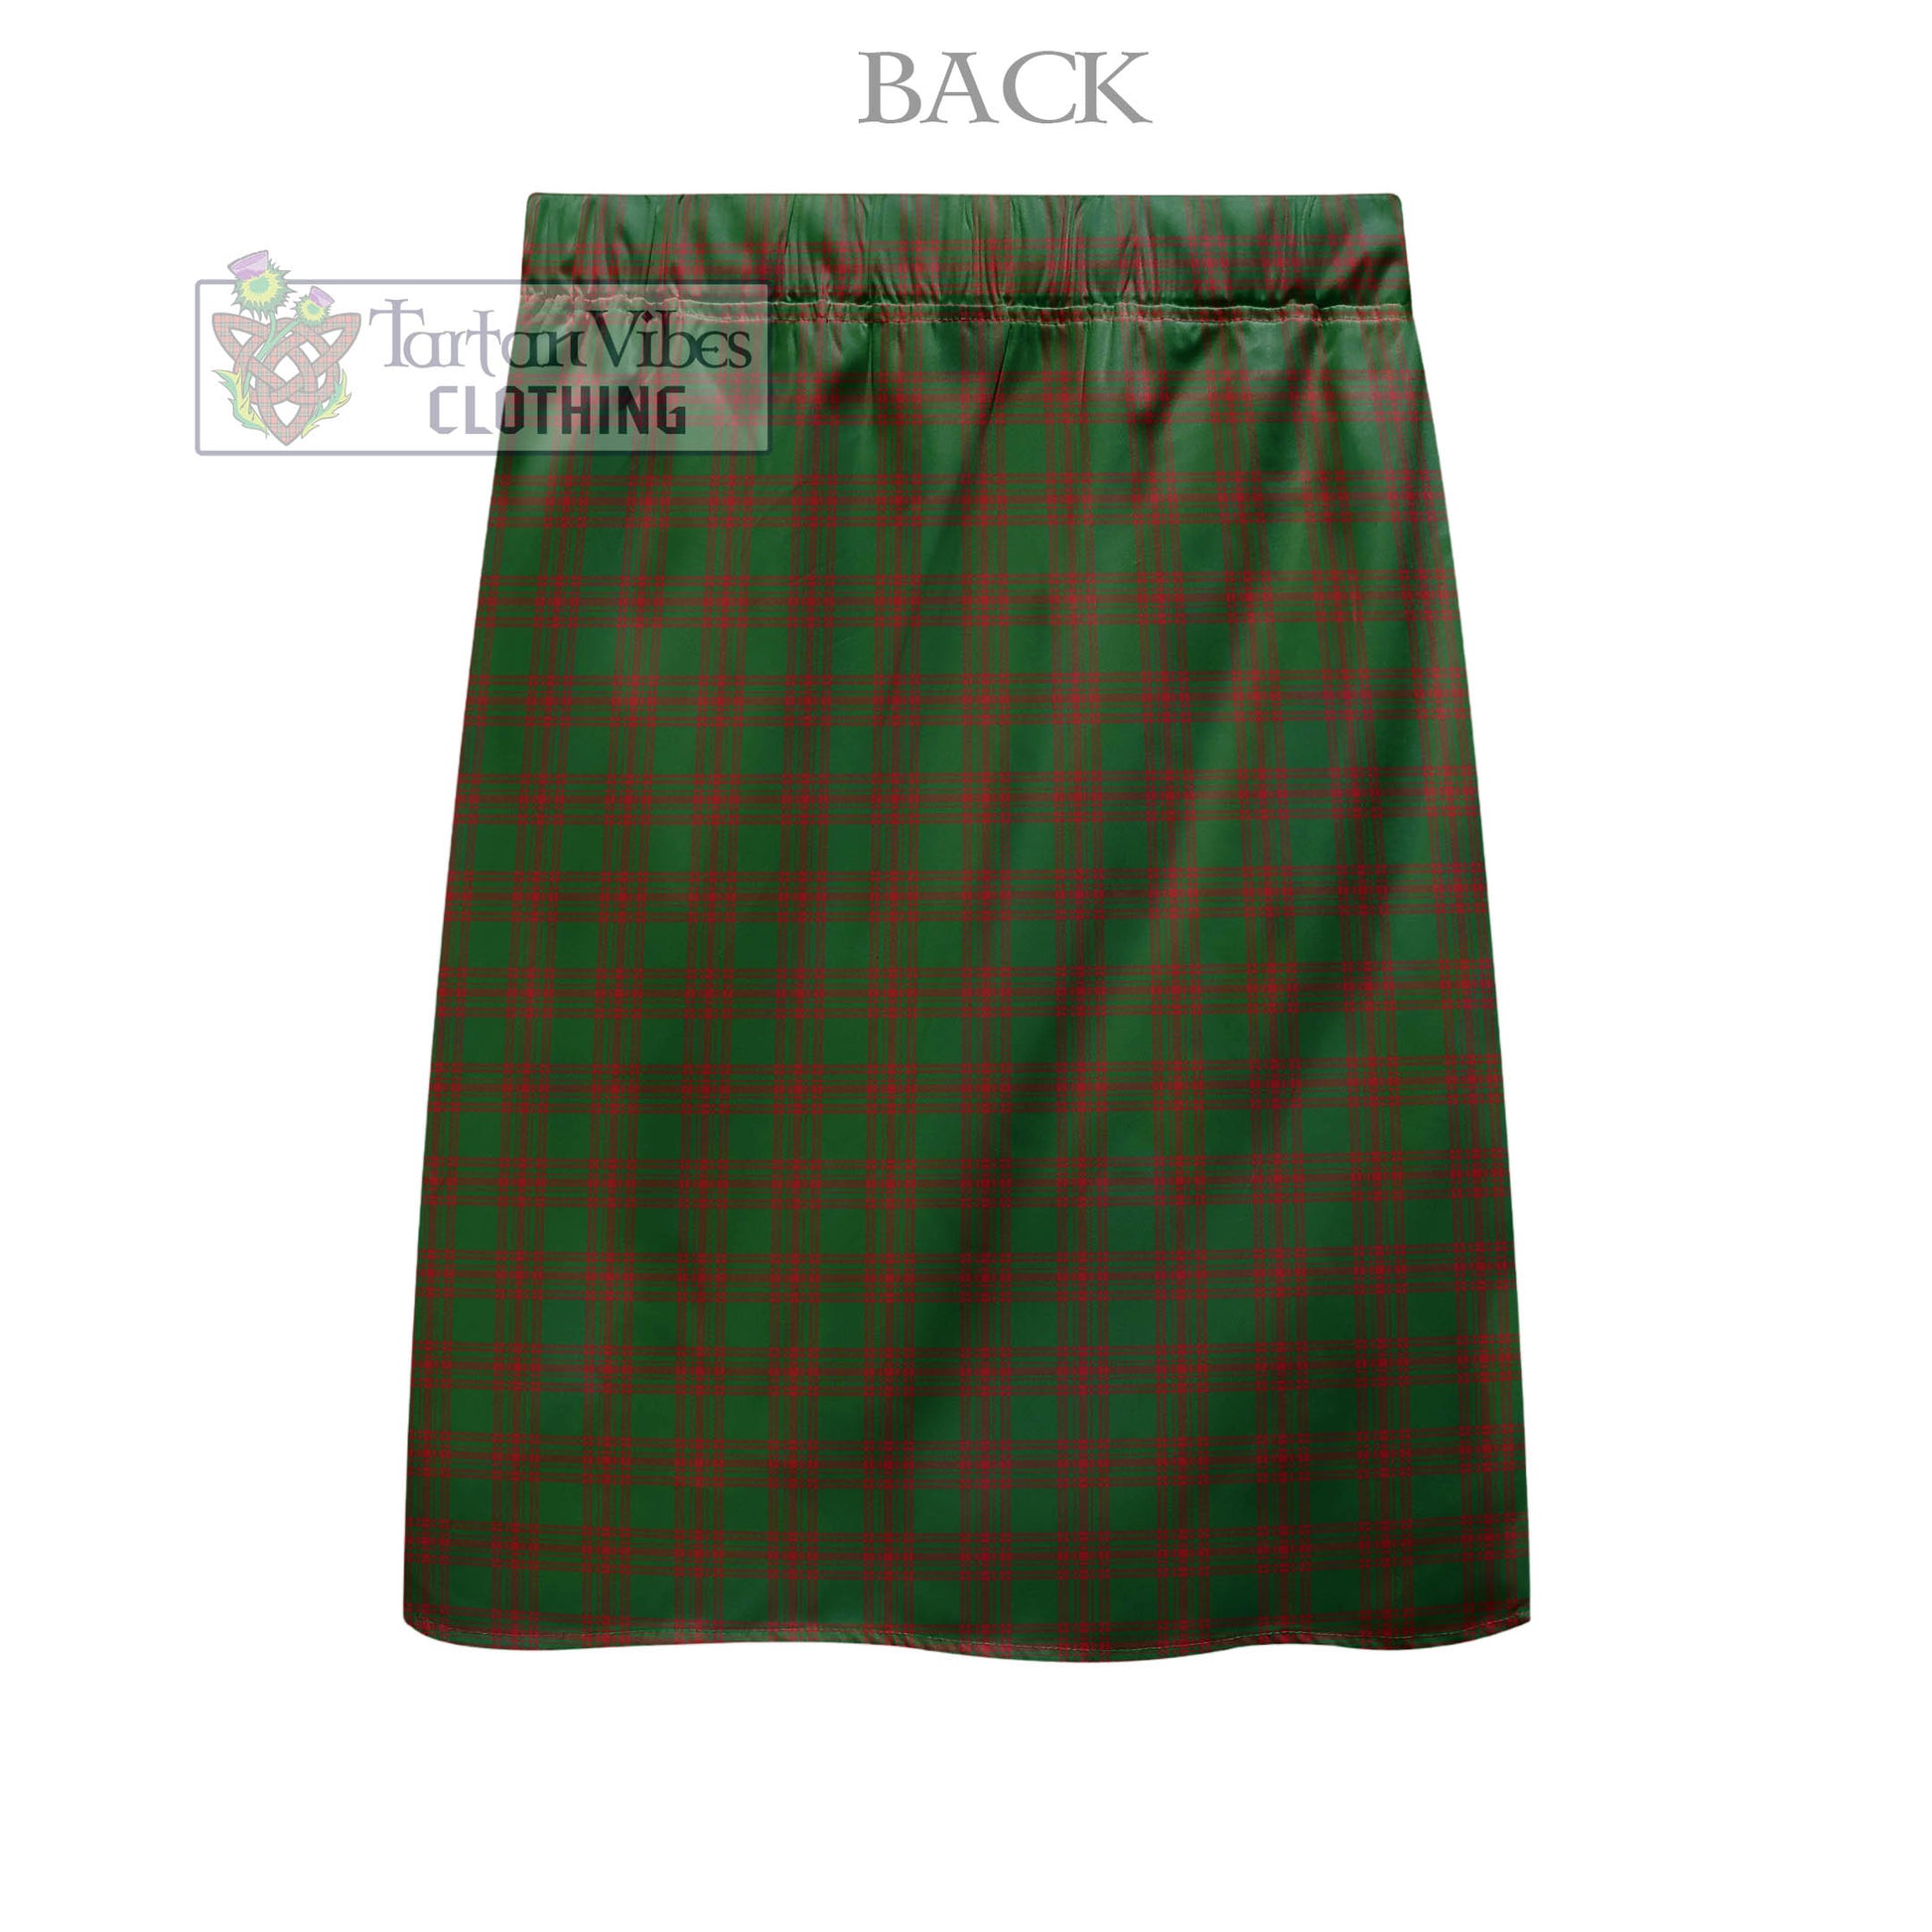 Tartan Vibes Clothing Menzies Tartan Men's Pleated Skirt - Fashion Casual Retro Scottish Style